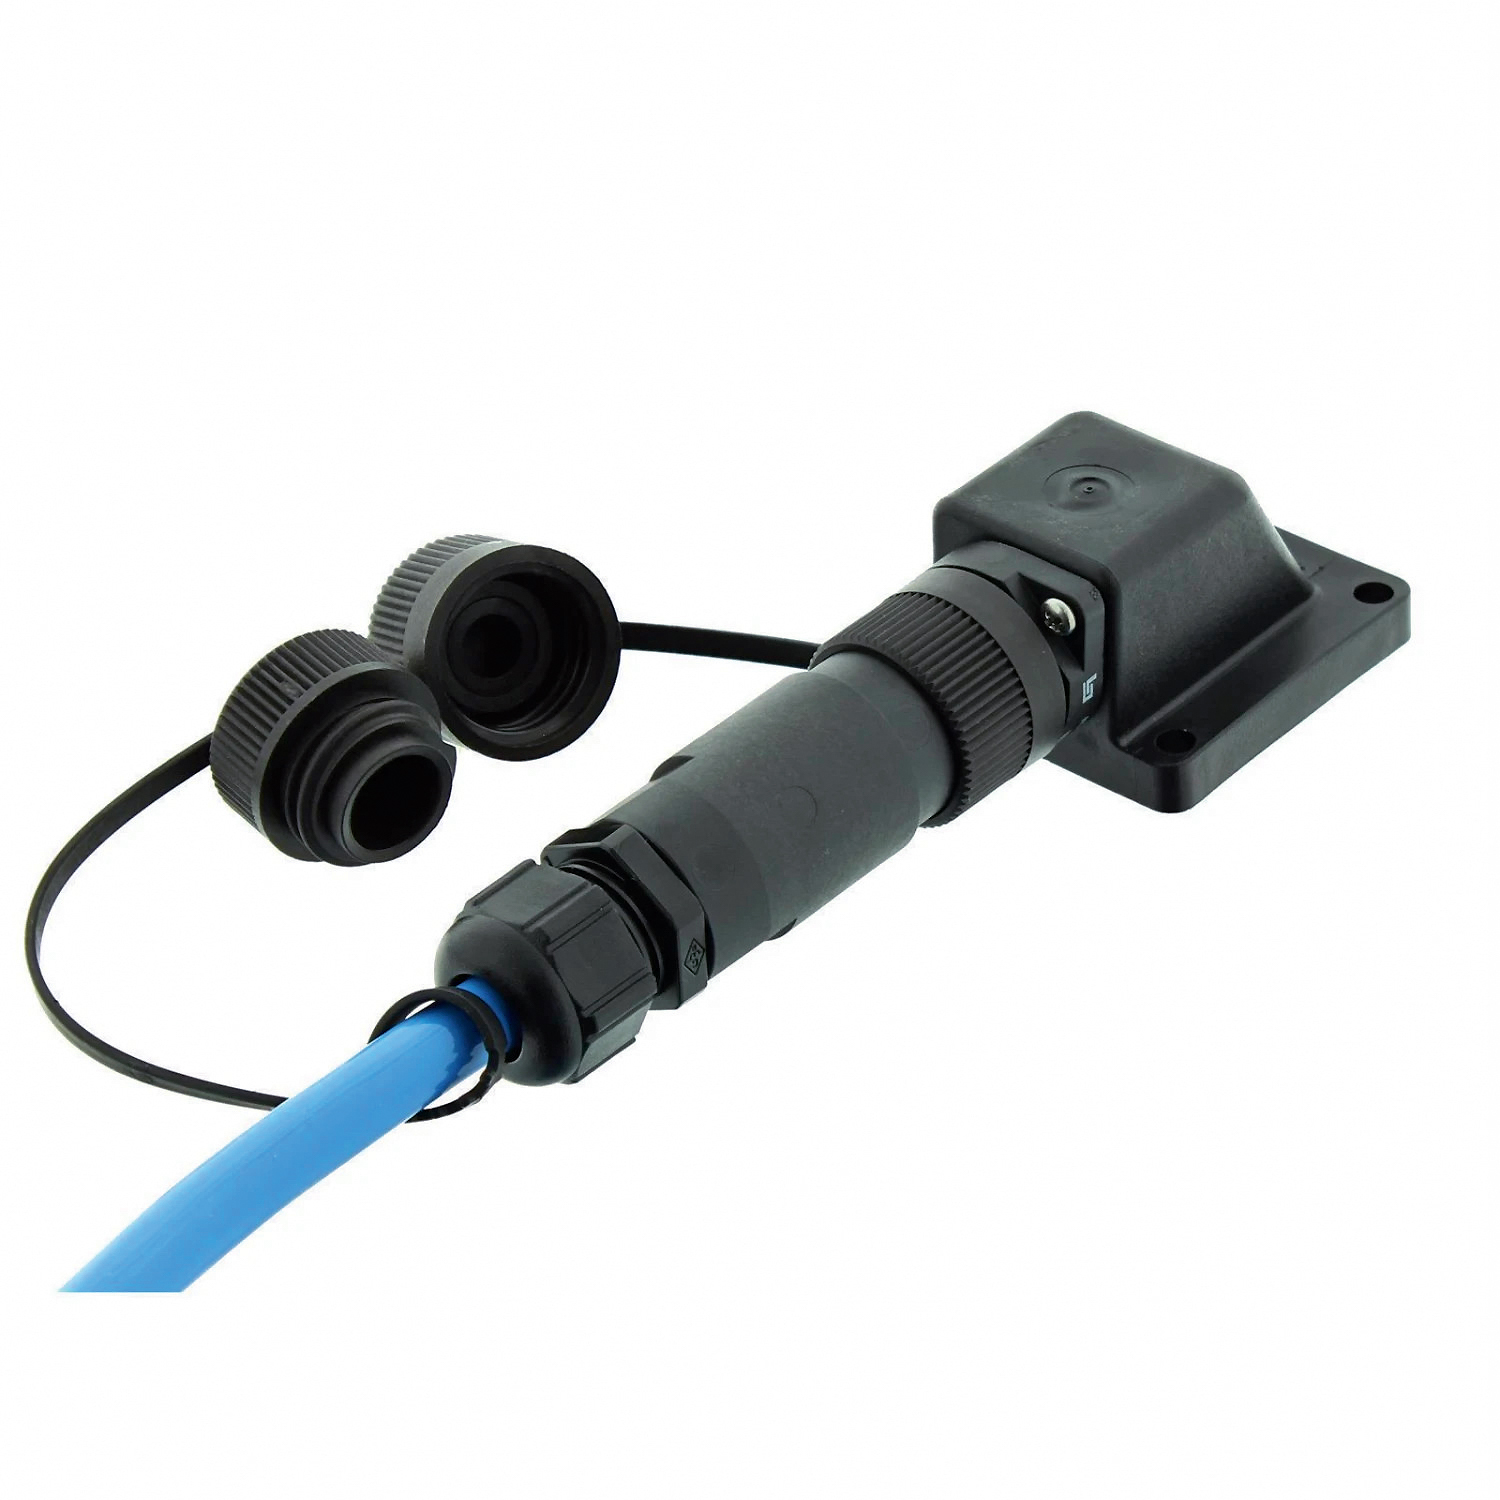 Hook-Up Wires - KLASING Kabel GmbH